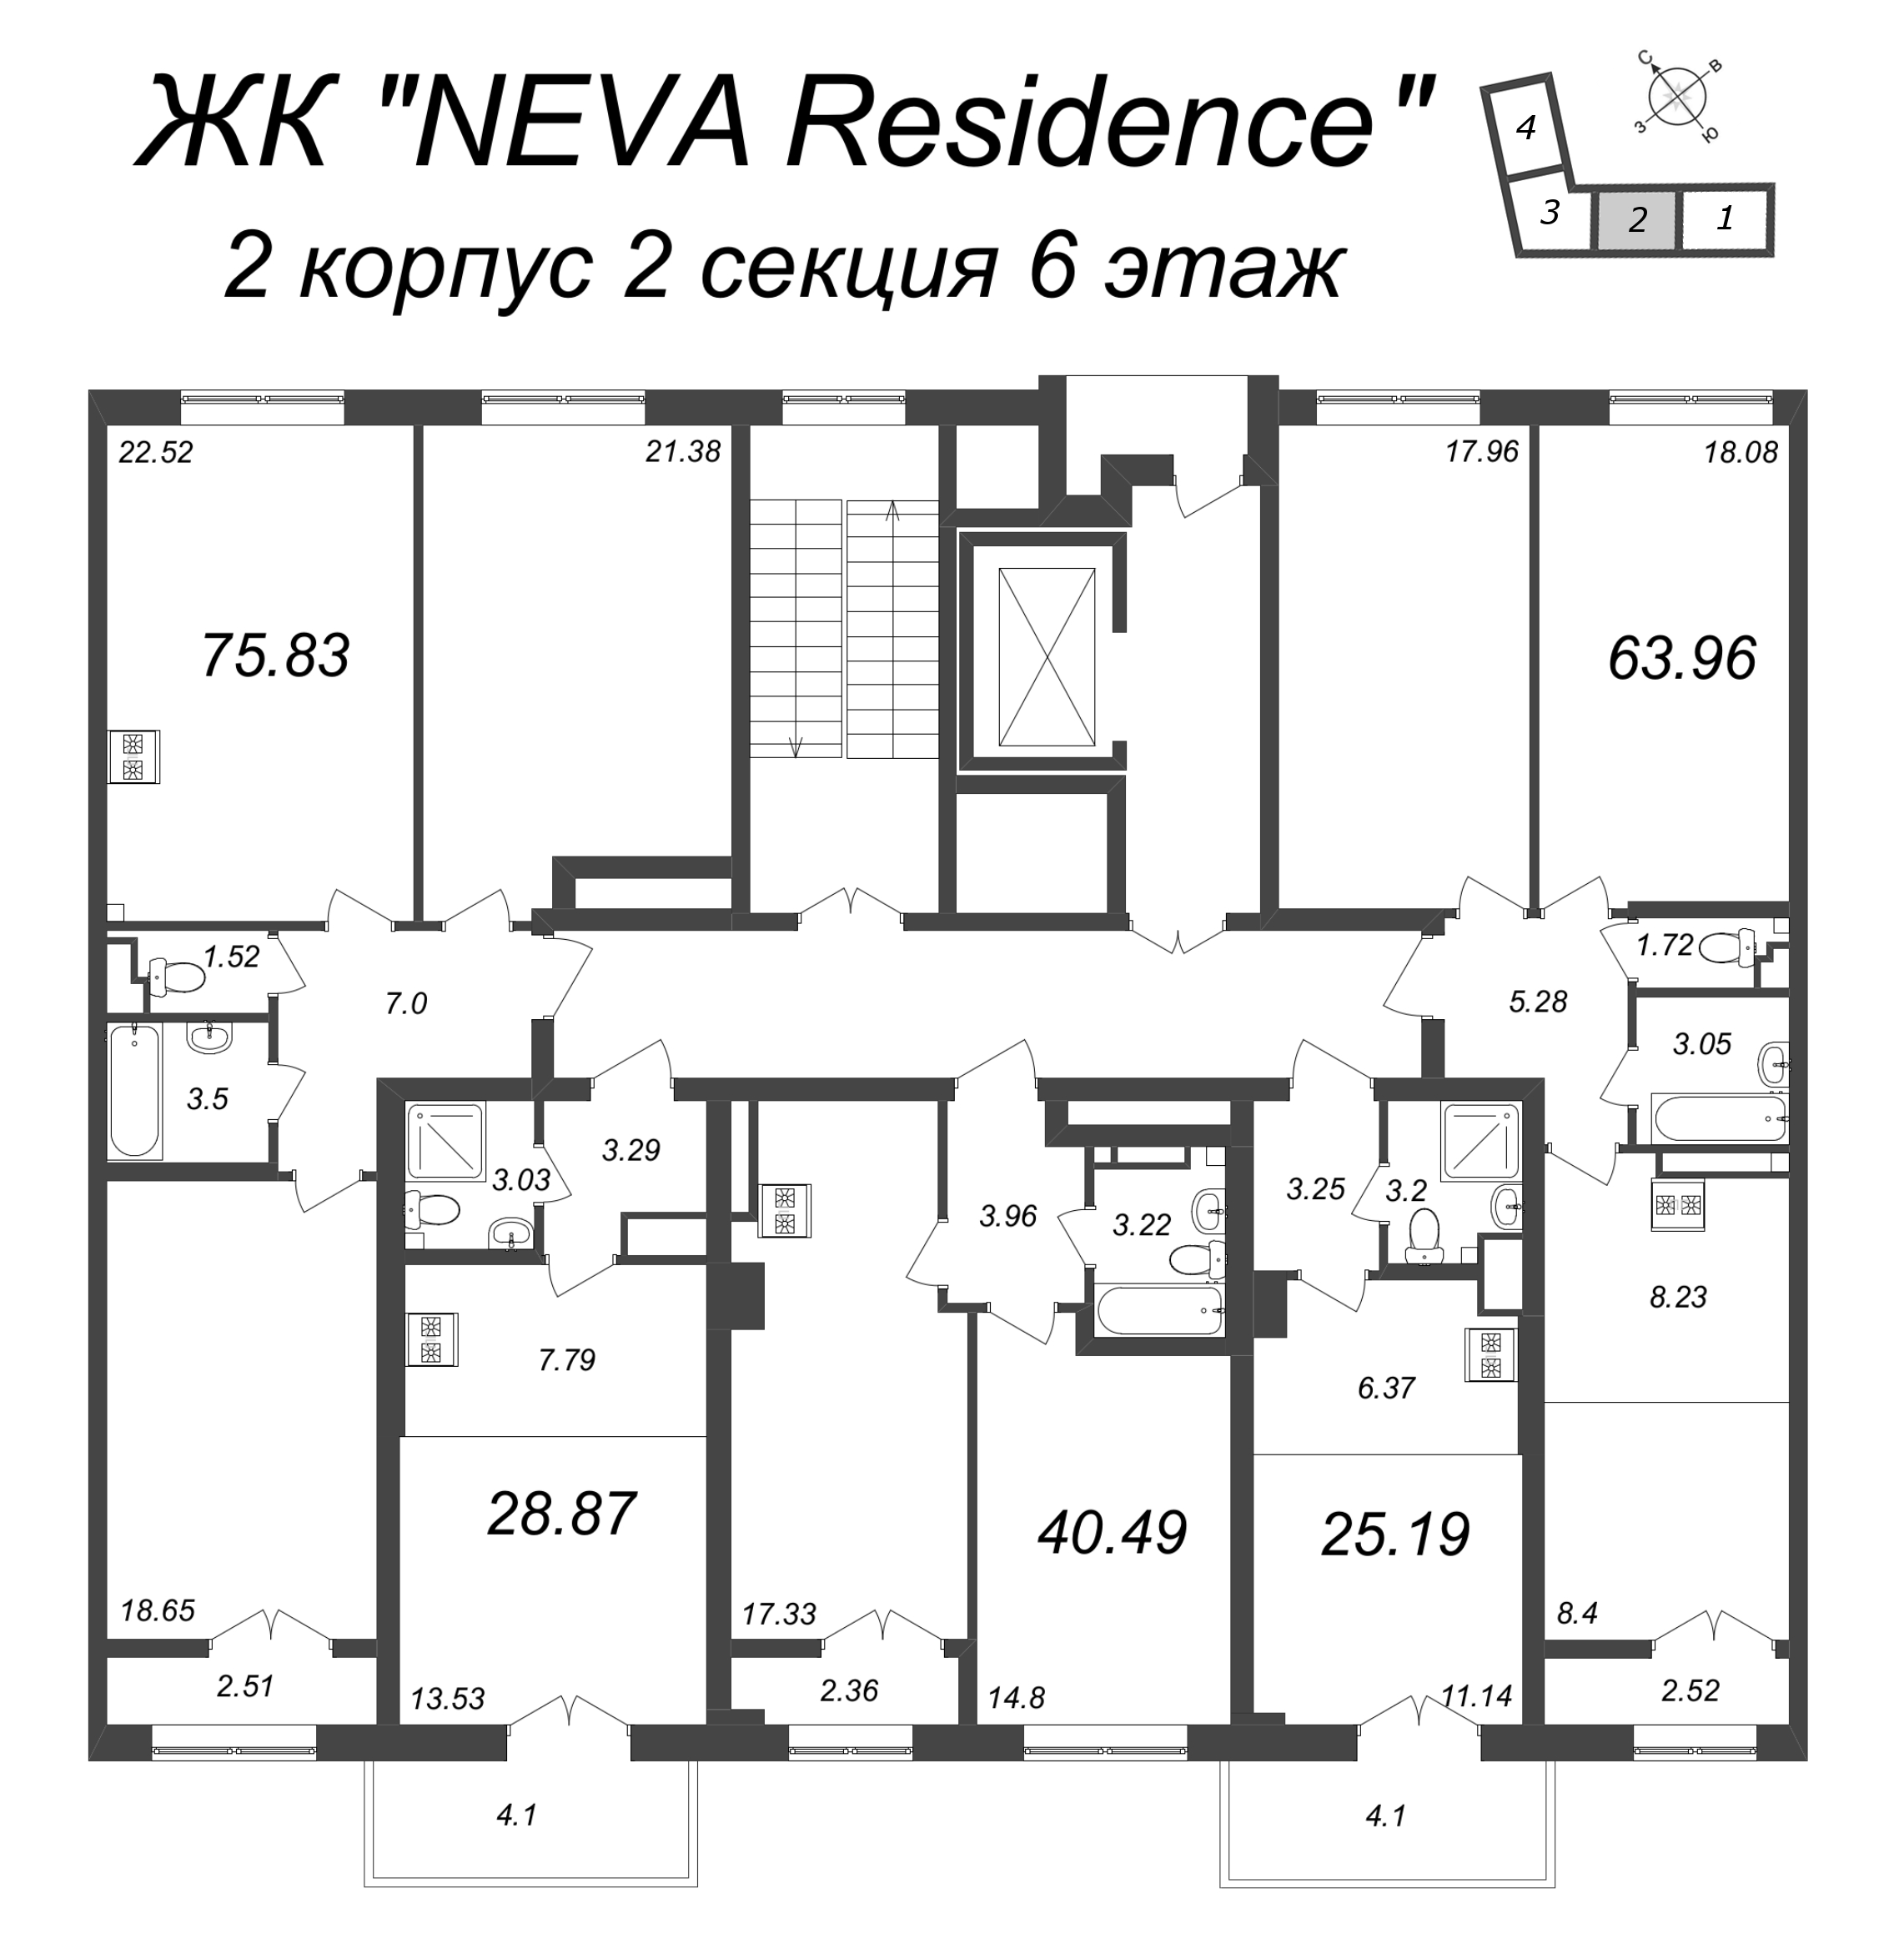 3-комнатная (Евро) квартира, 75.83 м² - планировка этажа